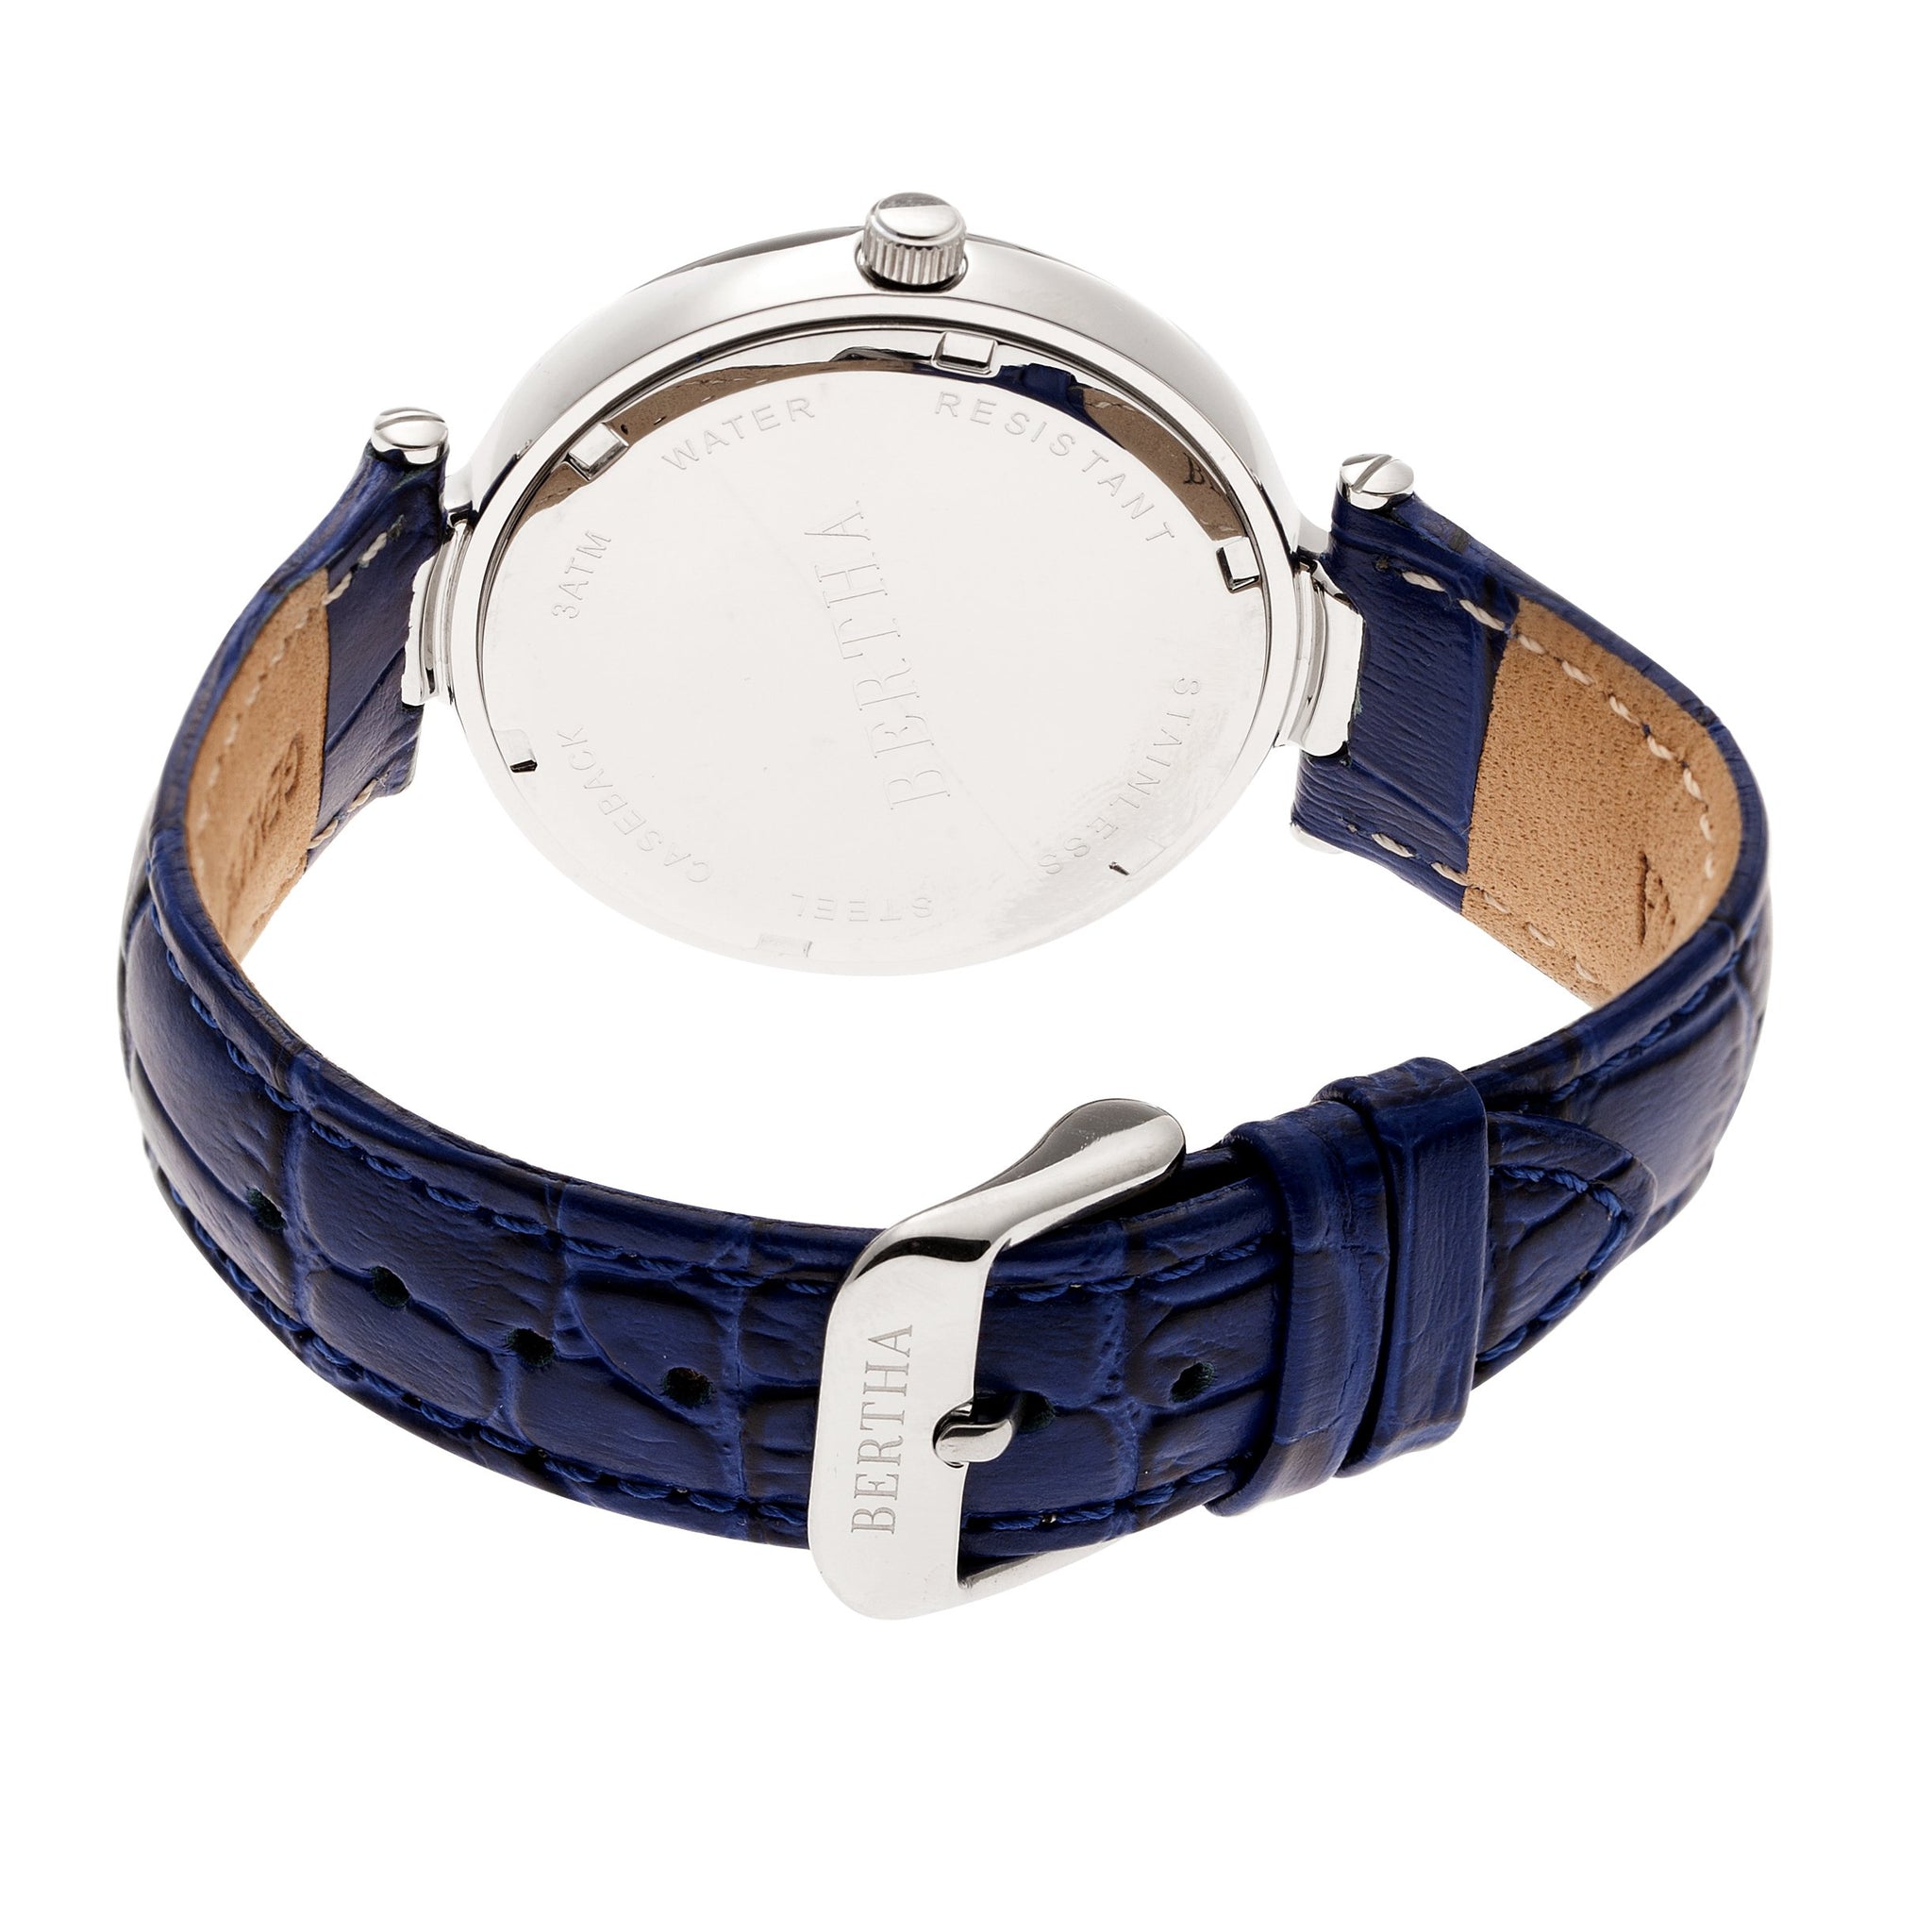 Bertha Elizabeth Unique Bezel Leather-Band Watch - Silver/Blue - BTHBR6604